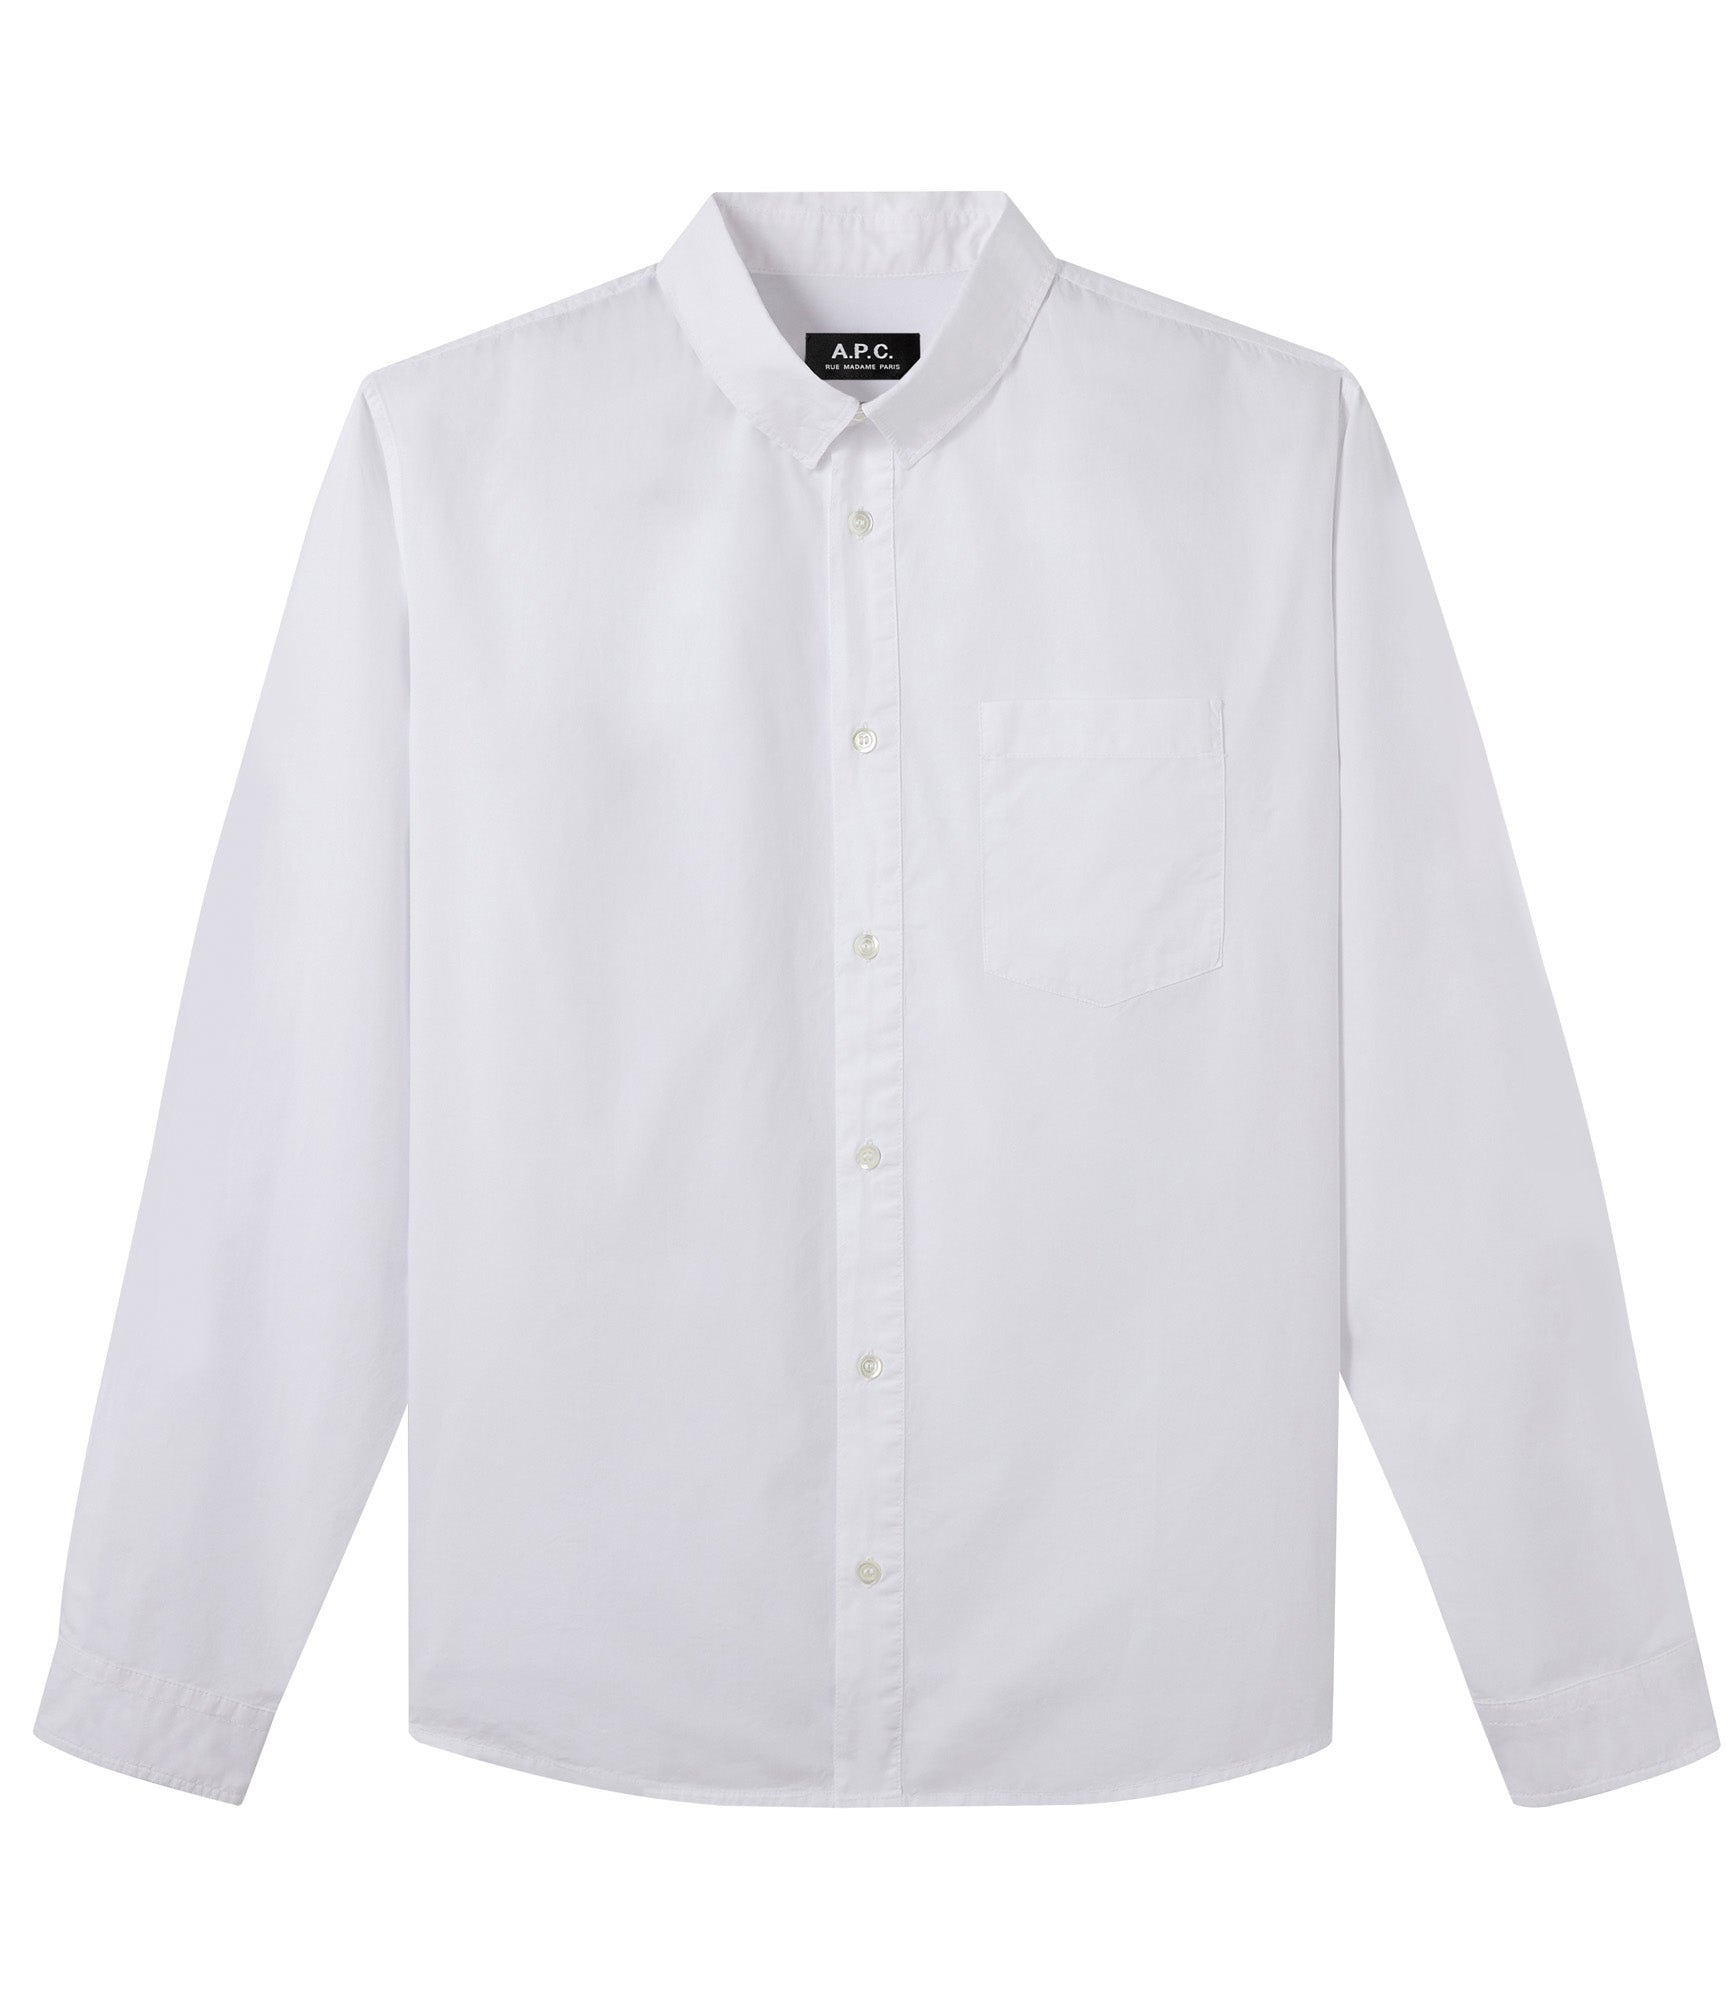 Clément shirt - Dyed cotton poplin | A.P.C. Ready-to-wear